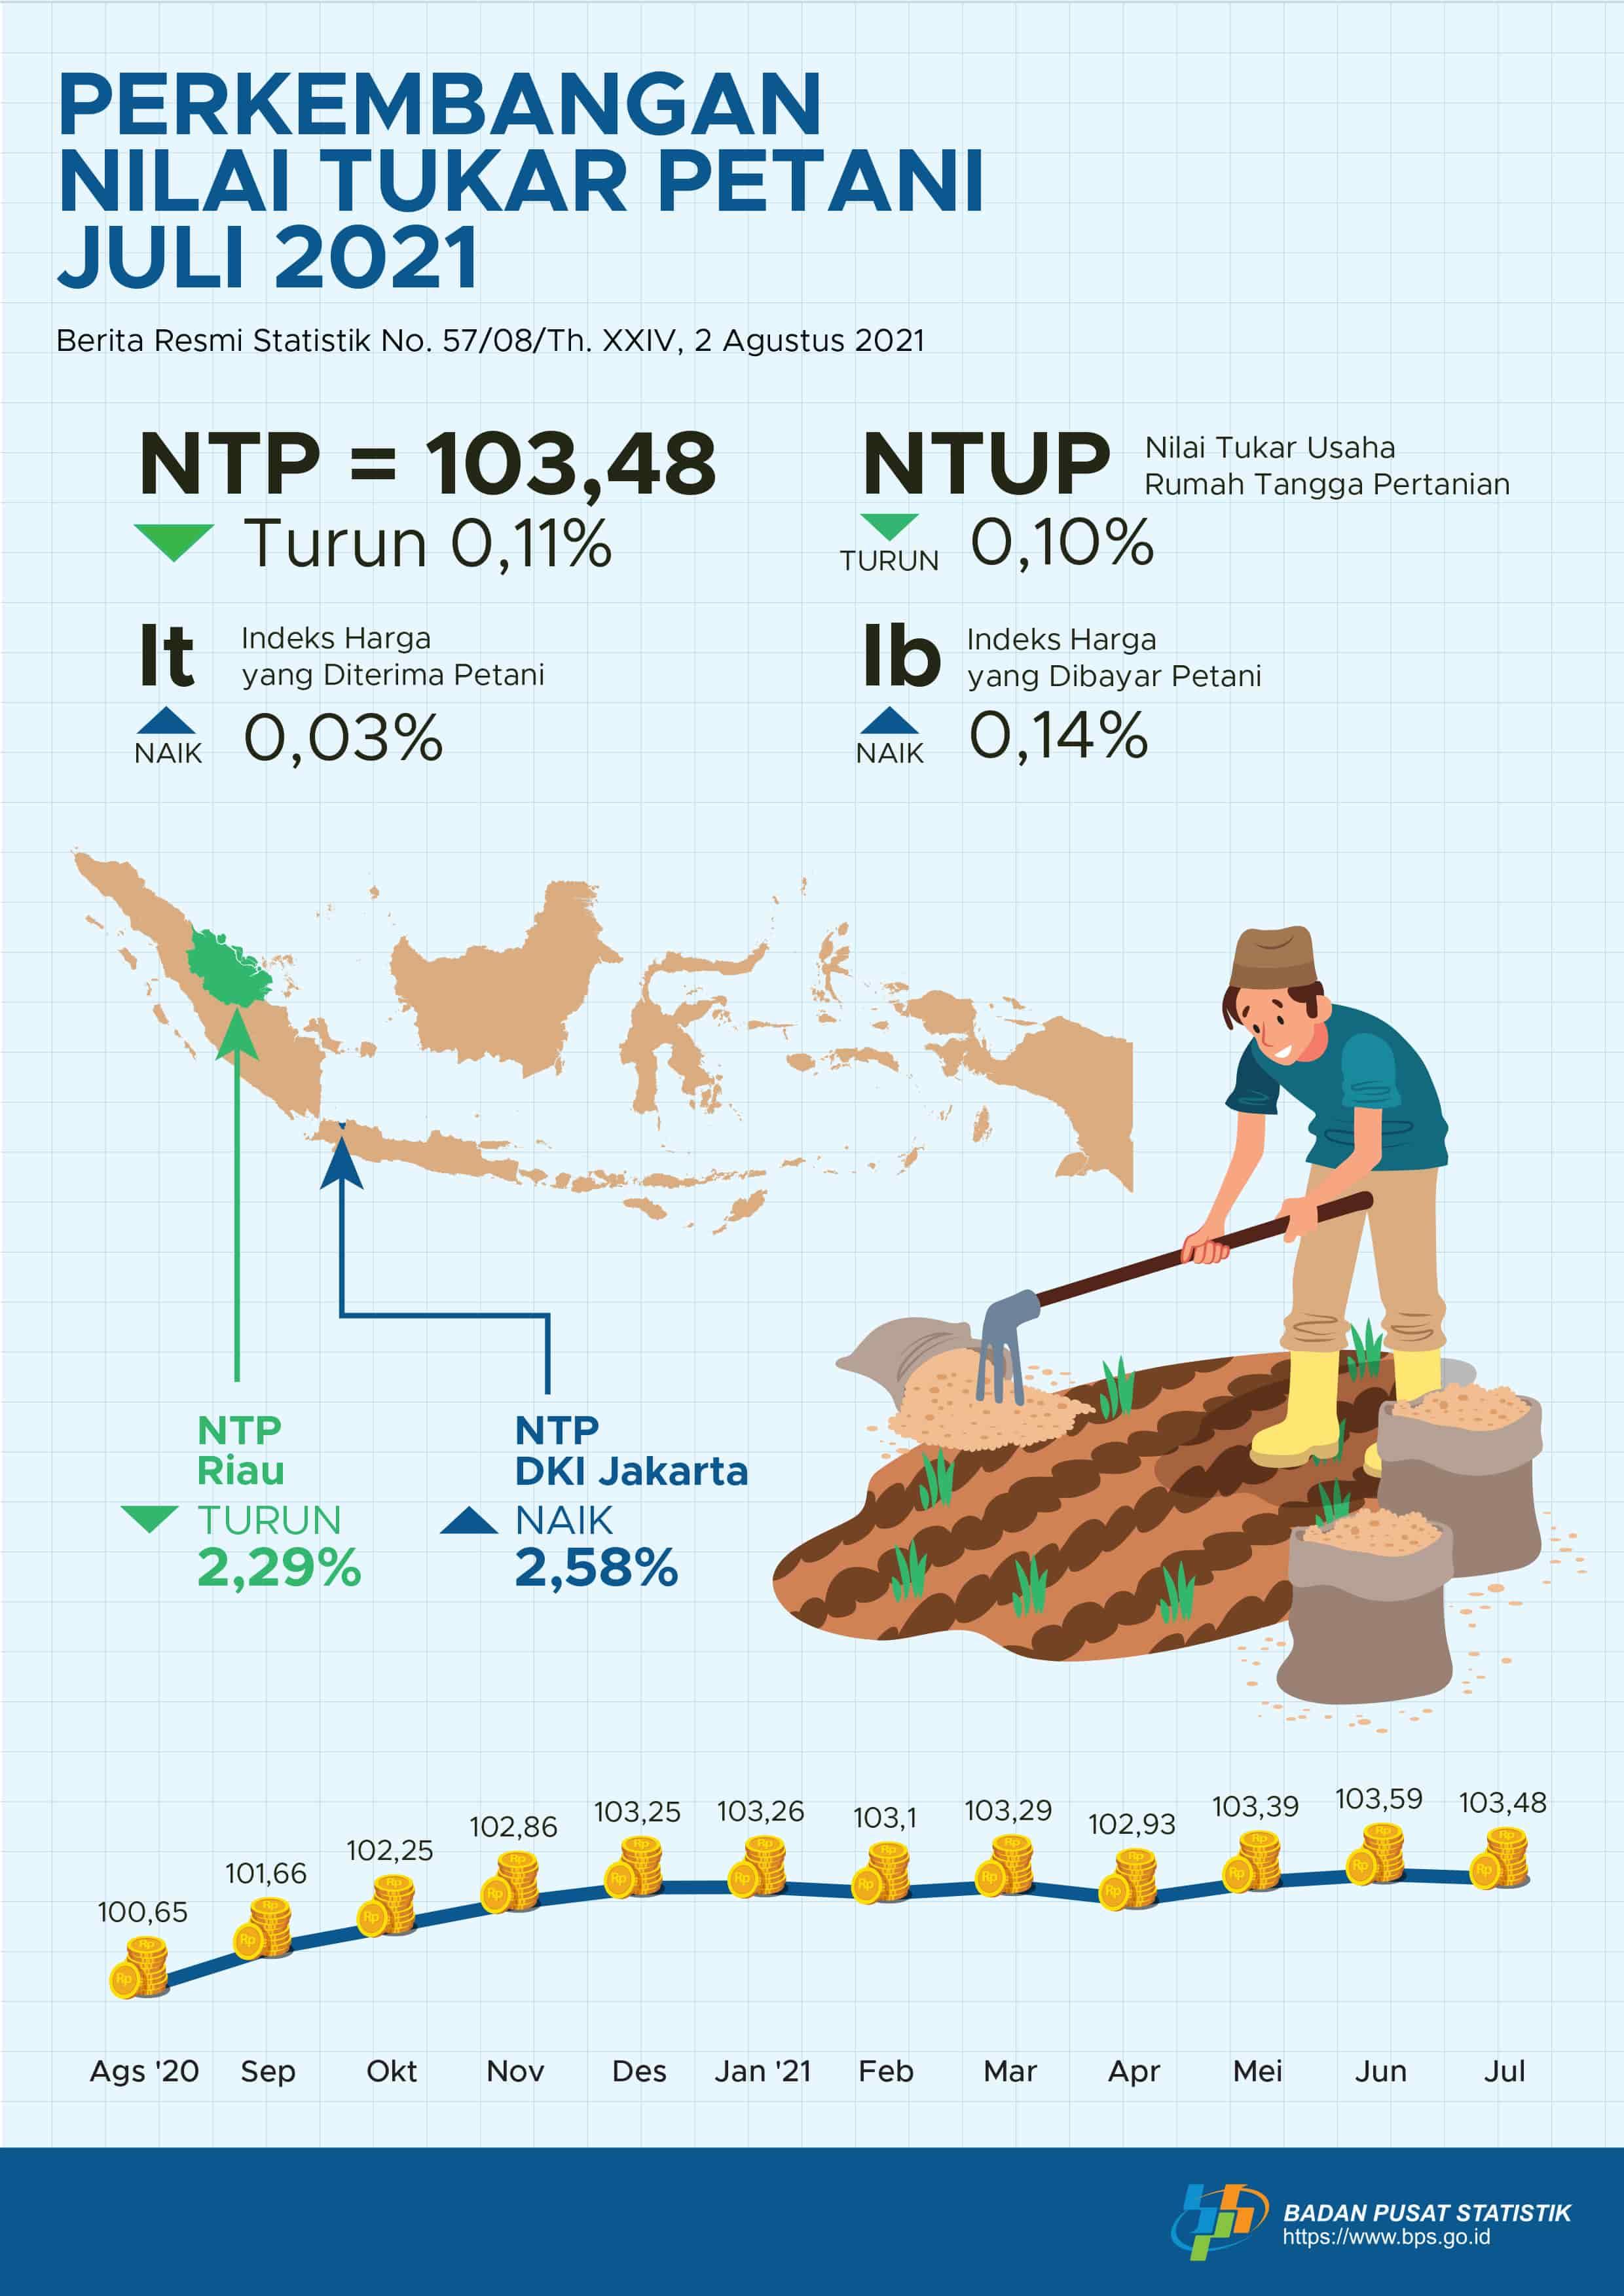 Farmer's Exchange Rate (NTP) July 2021 was 103.48 or decreased 0.11 percent